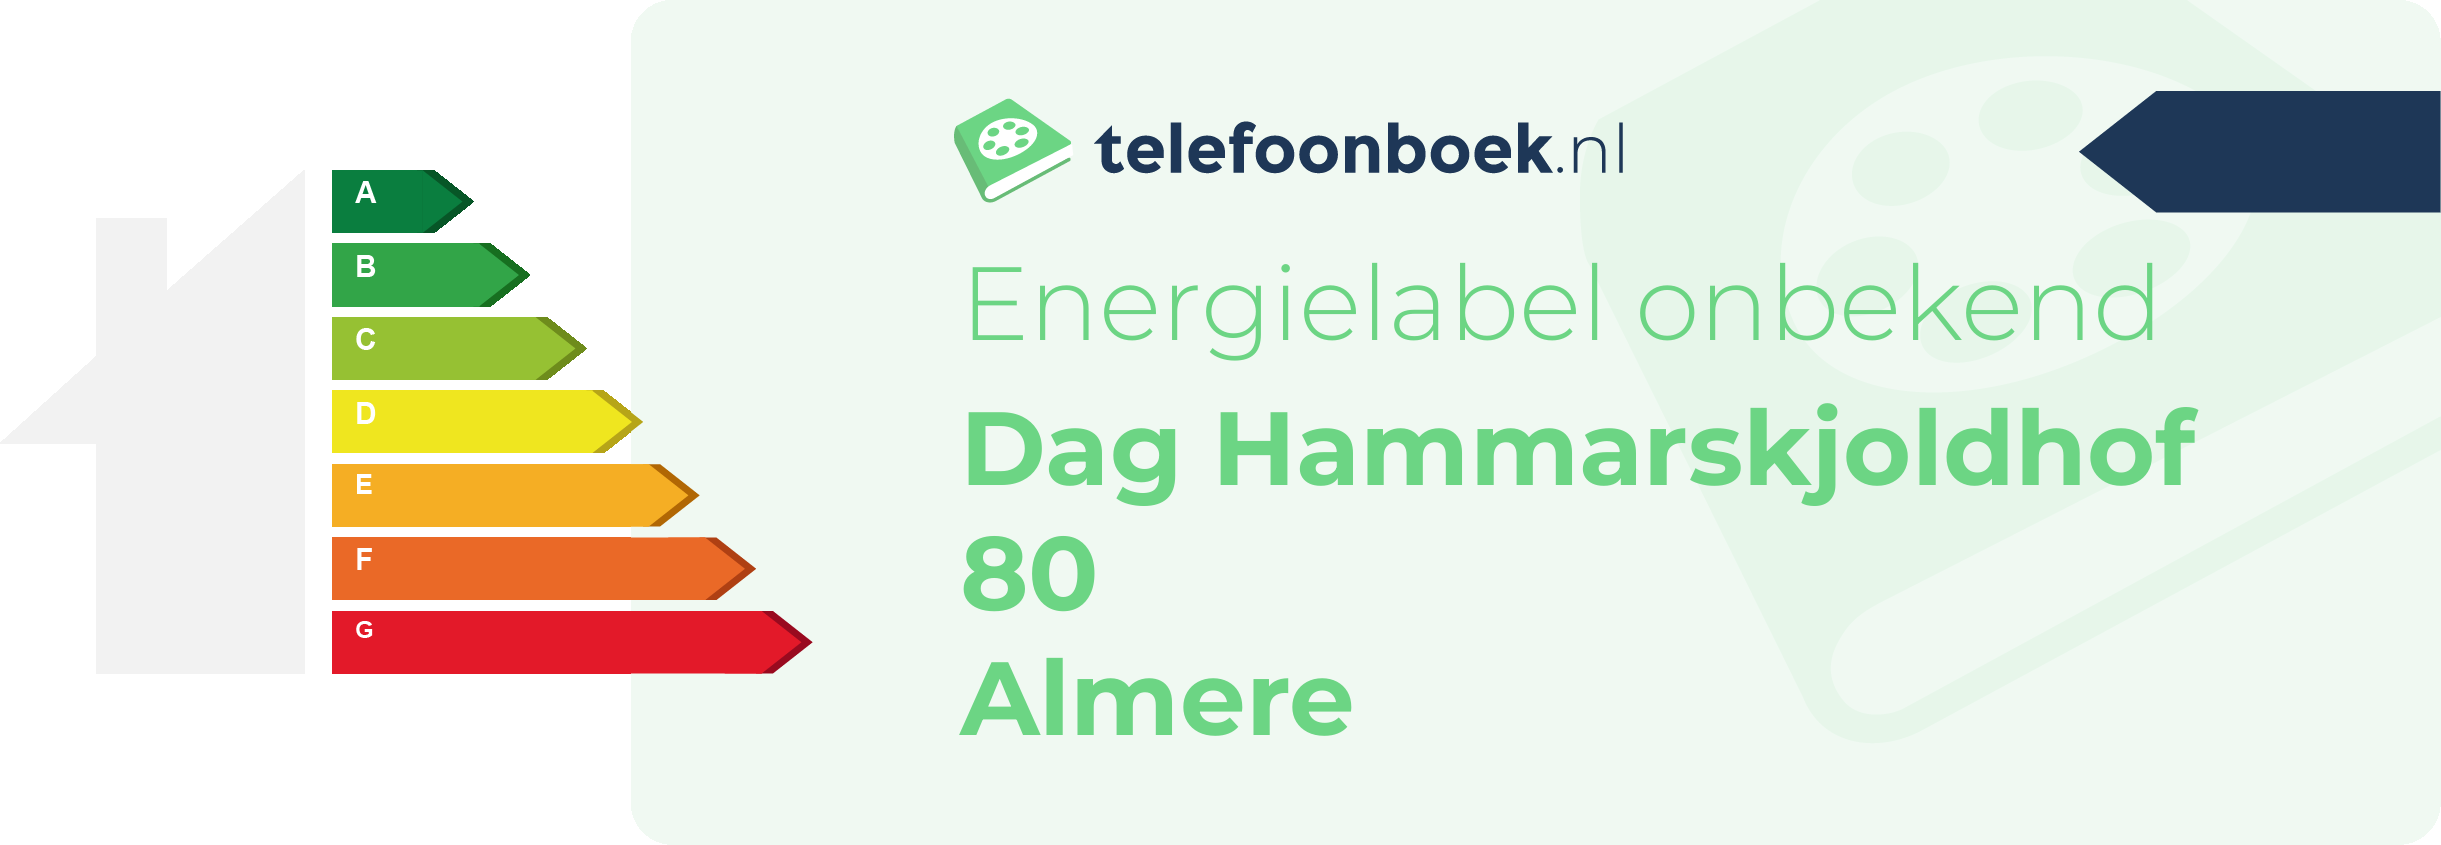 Energielabel Dag Hammarskjoldhof 80 Almere